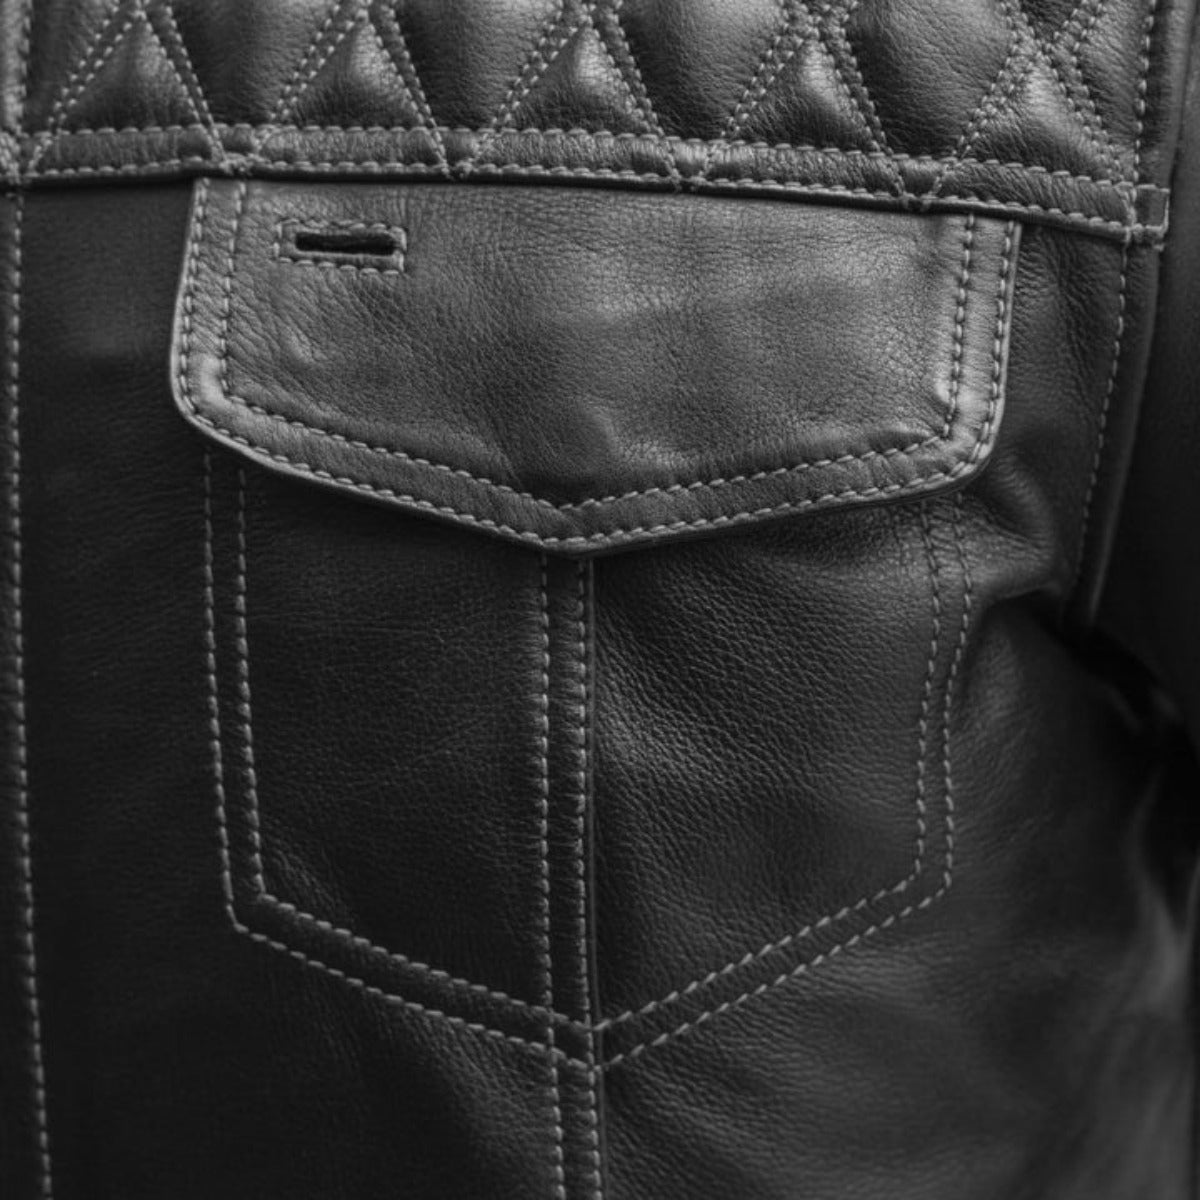 First Manufacturing Cinder - Men's Cafe Style Leather Jacket, Black/Grey